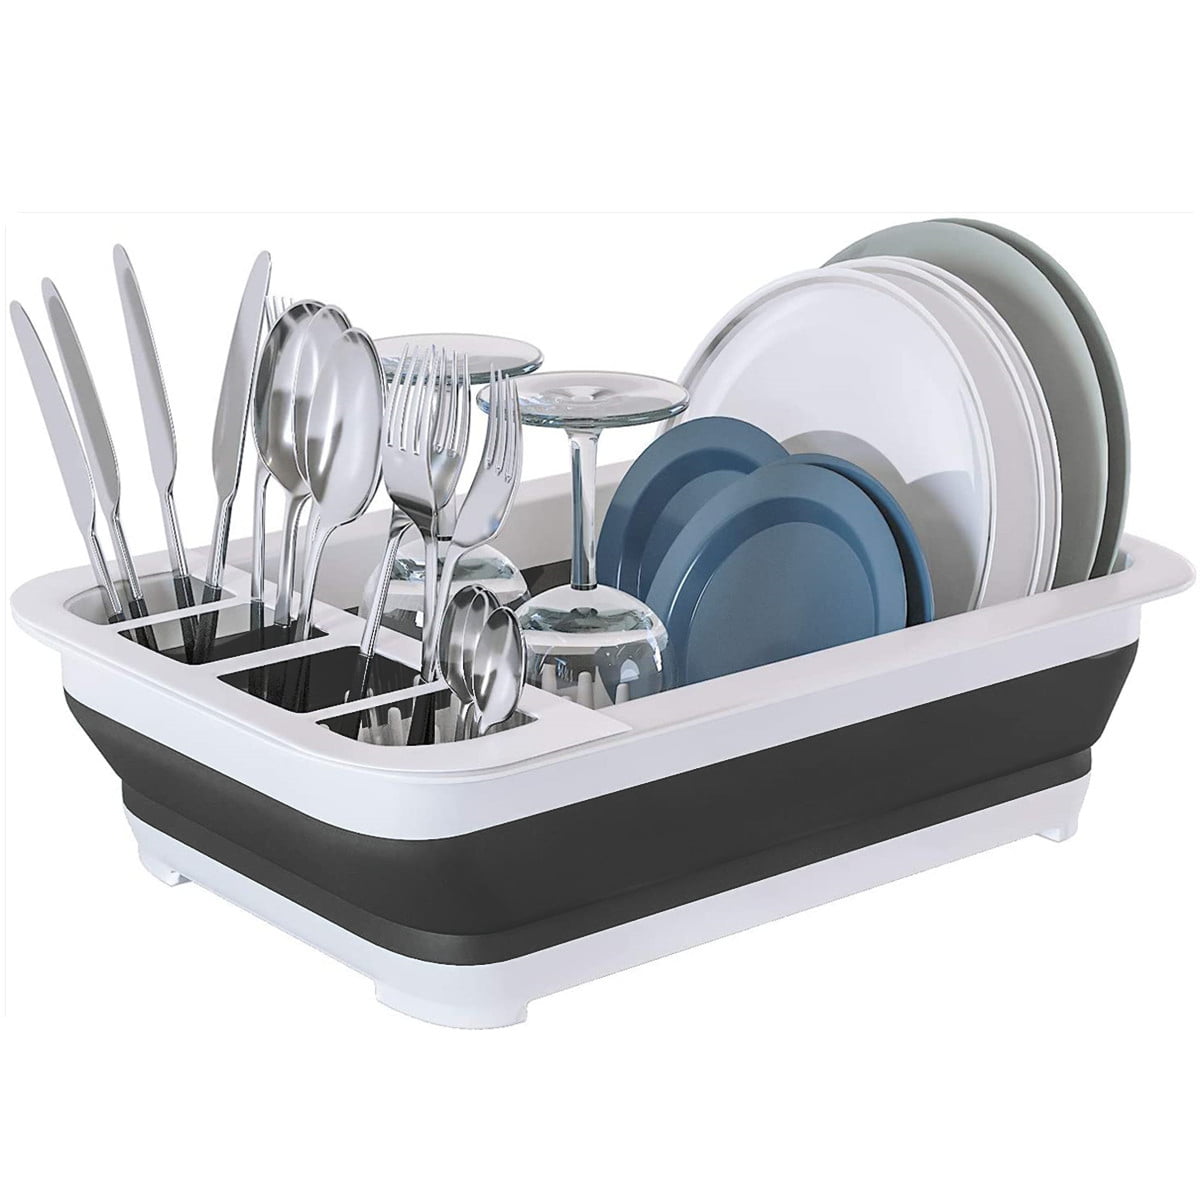 Hot 2021 Kitchen Bowls Storage Shelves Retractable Bowl Dish Holder Drain Rack